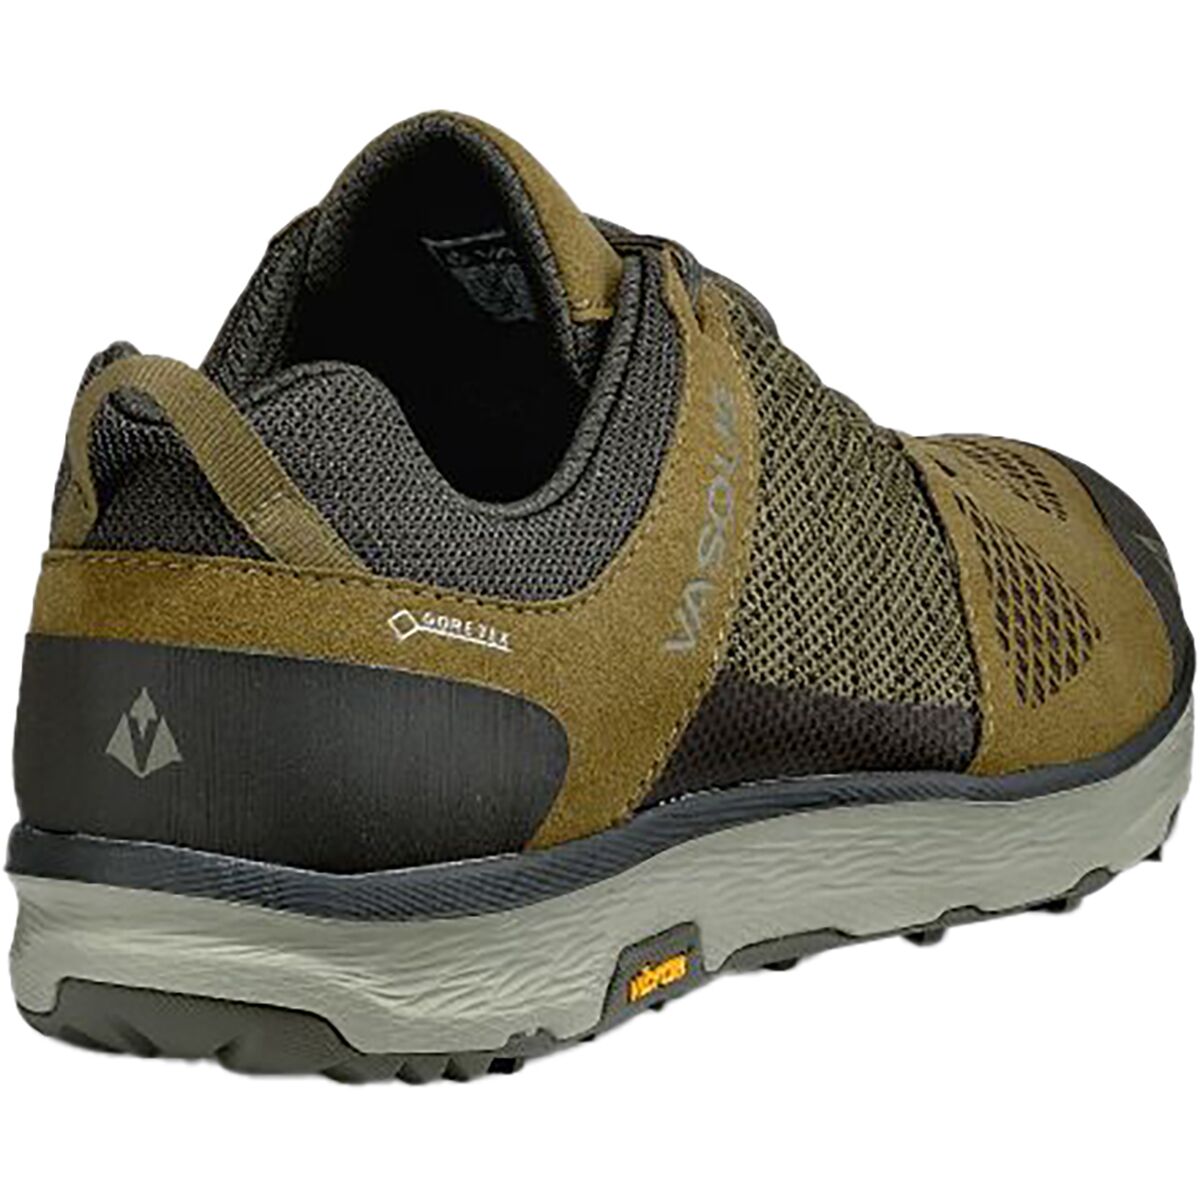 Vasque Breeze LT Low GTX Hiking Shoe - Men's | Backcountry.com